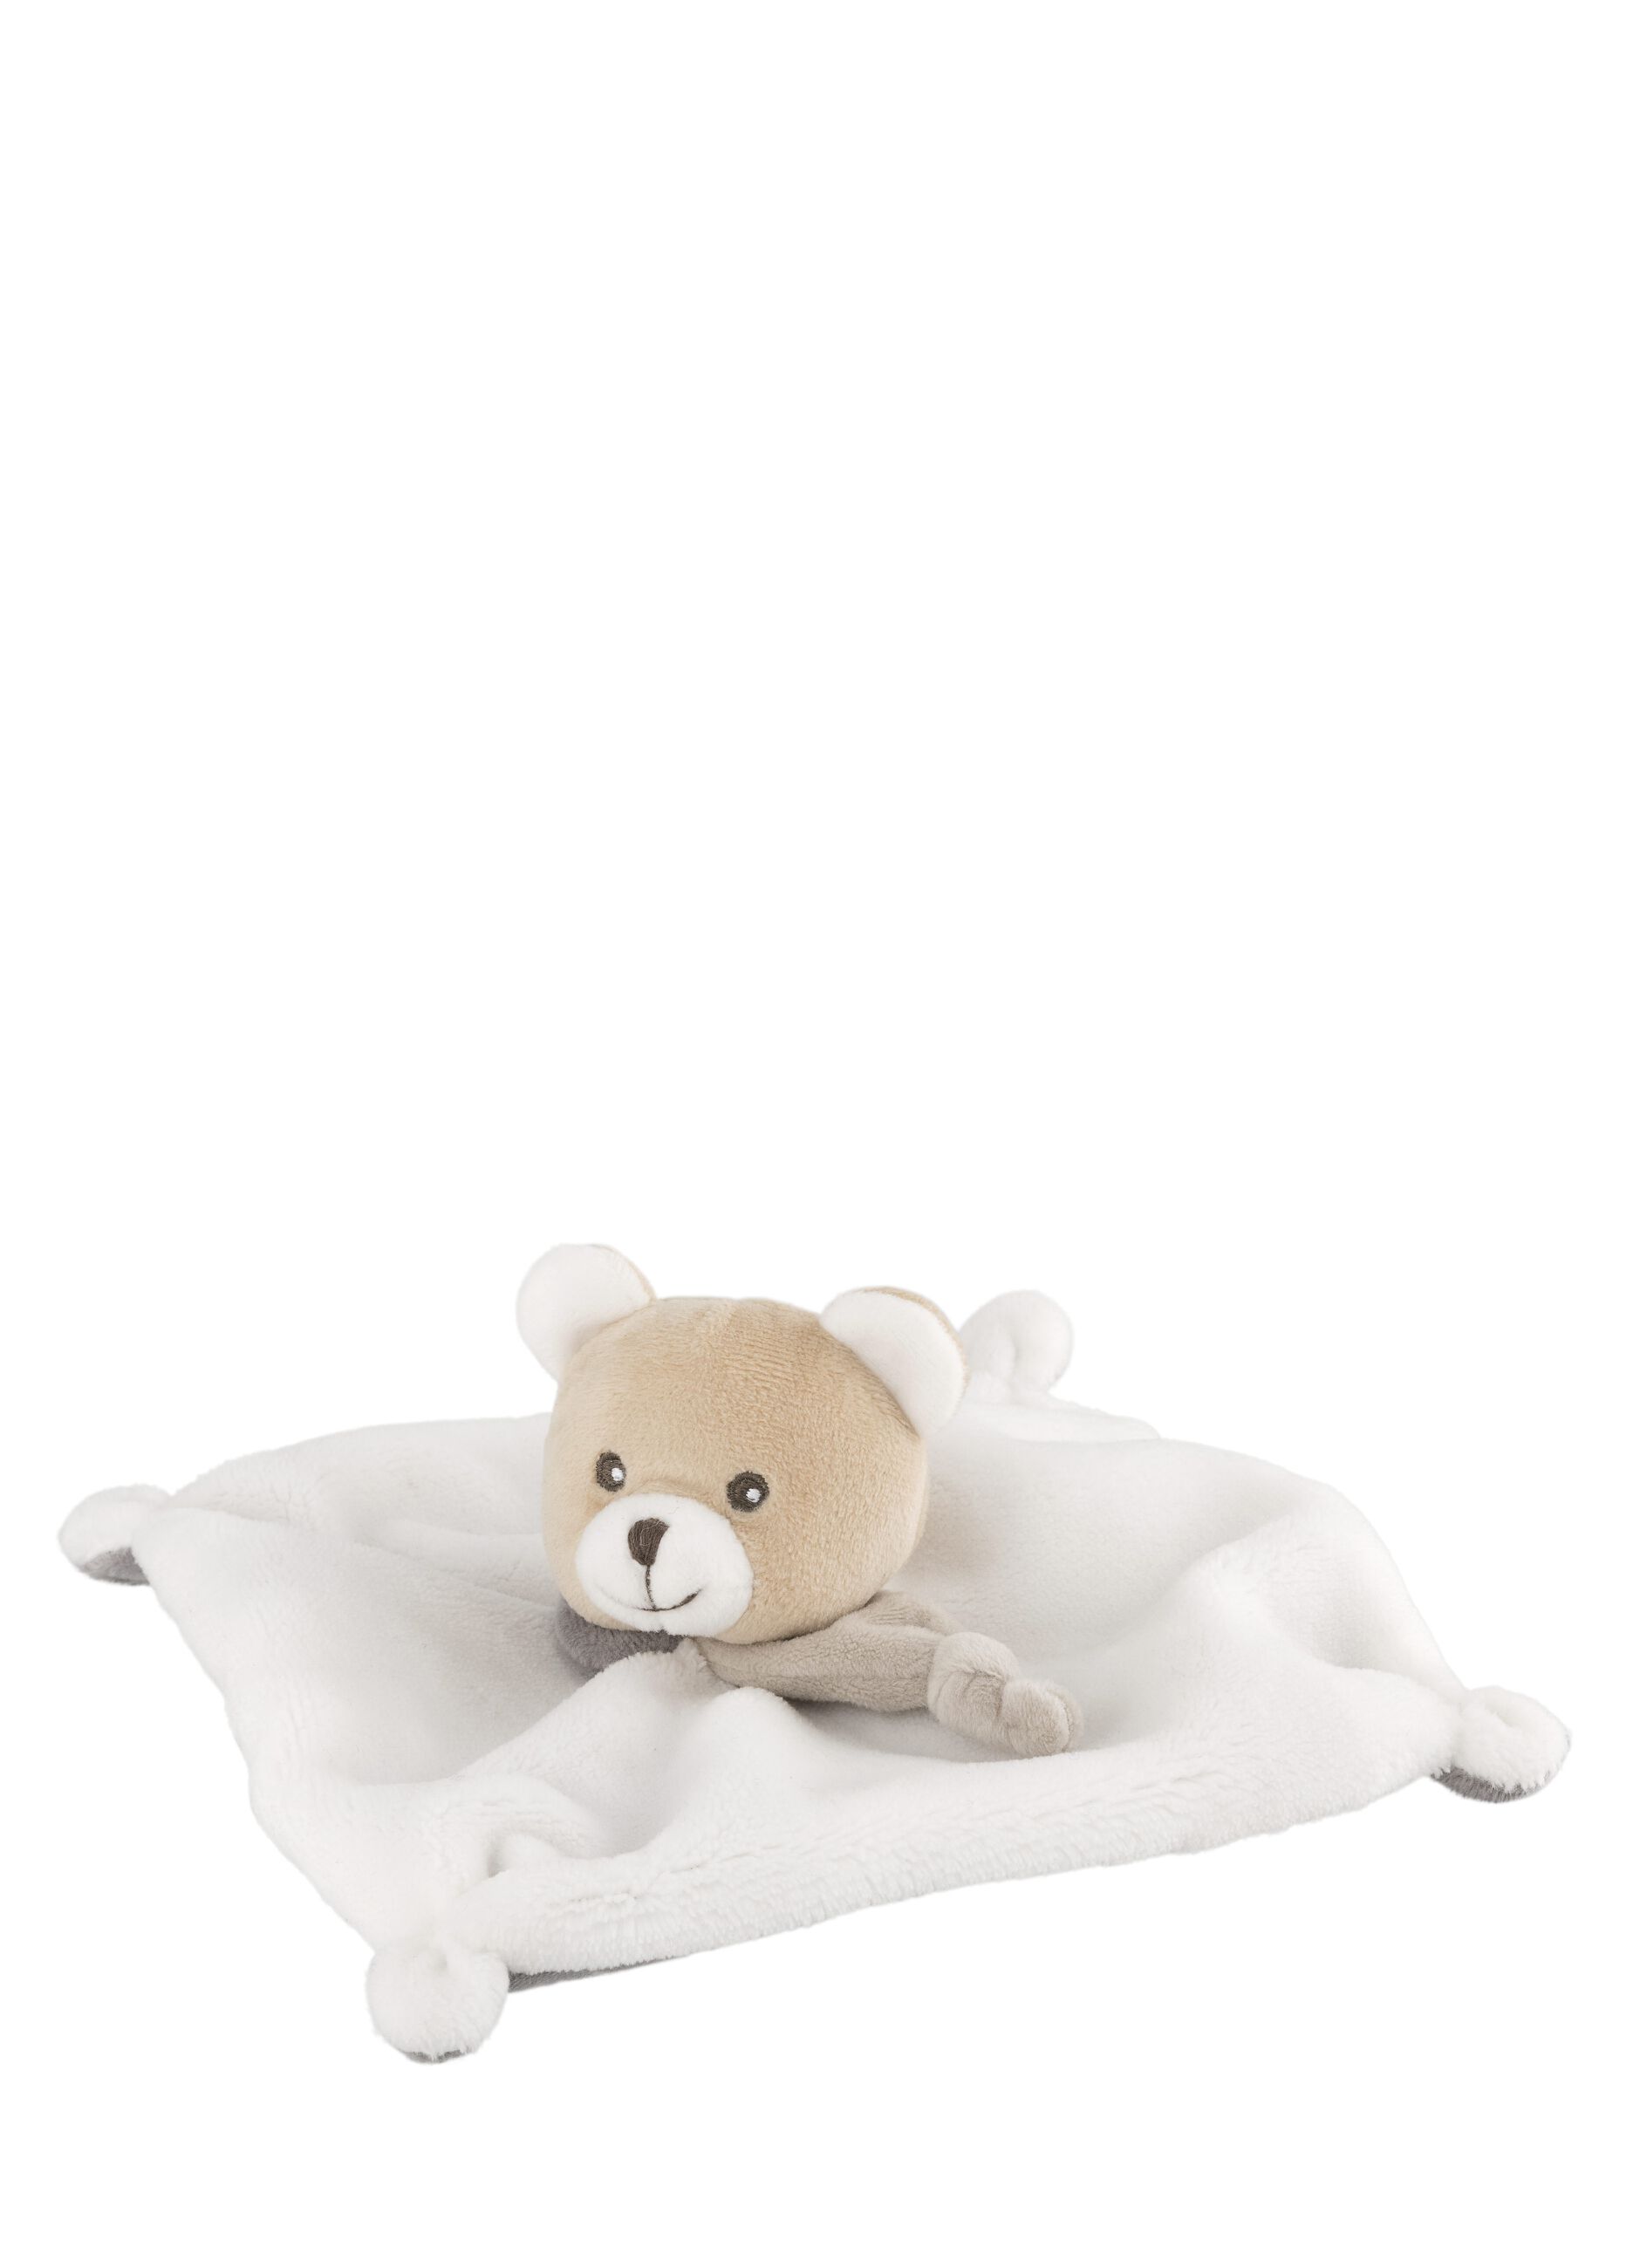 Chicco teddy bear comforter toy